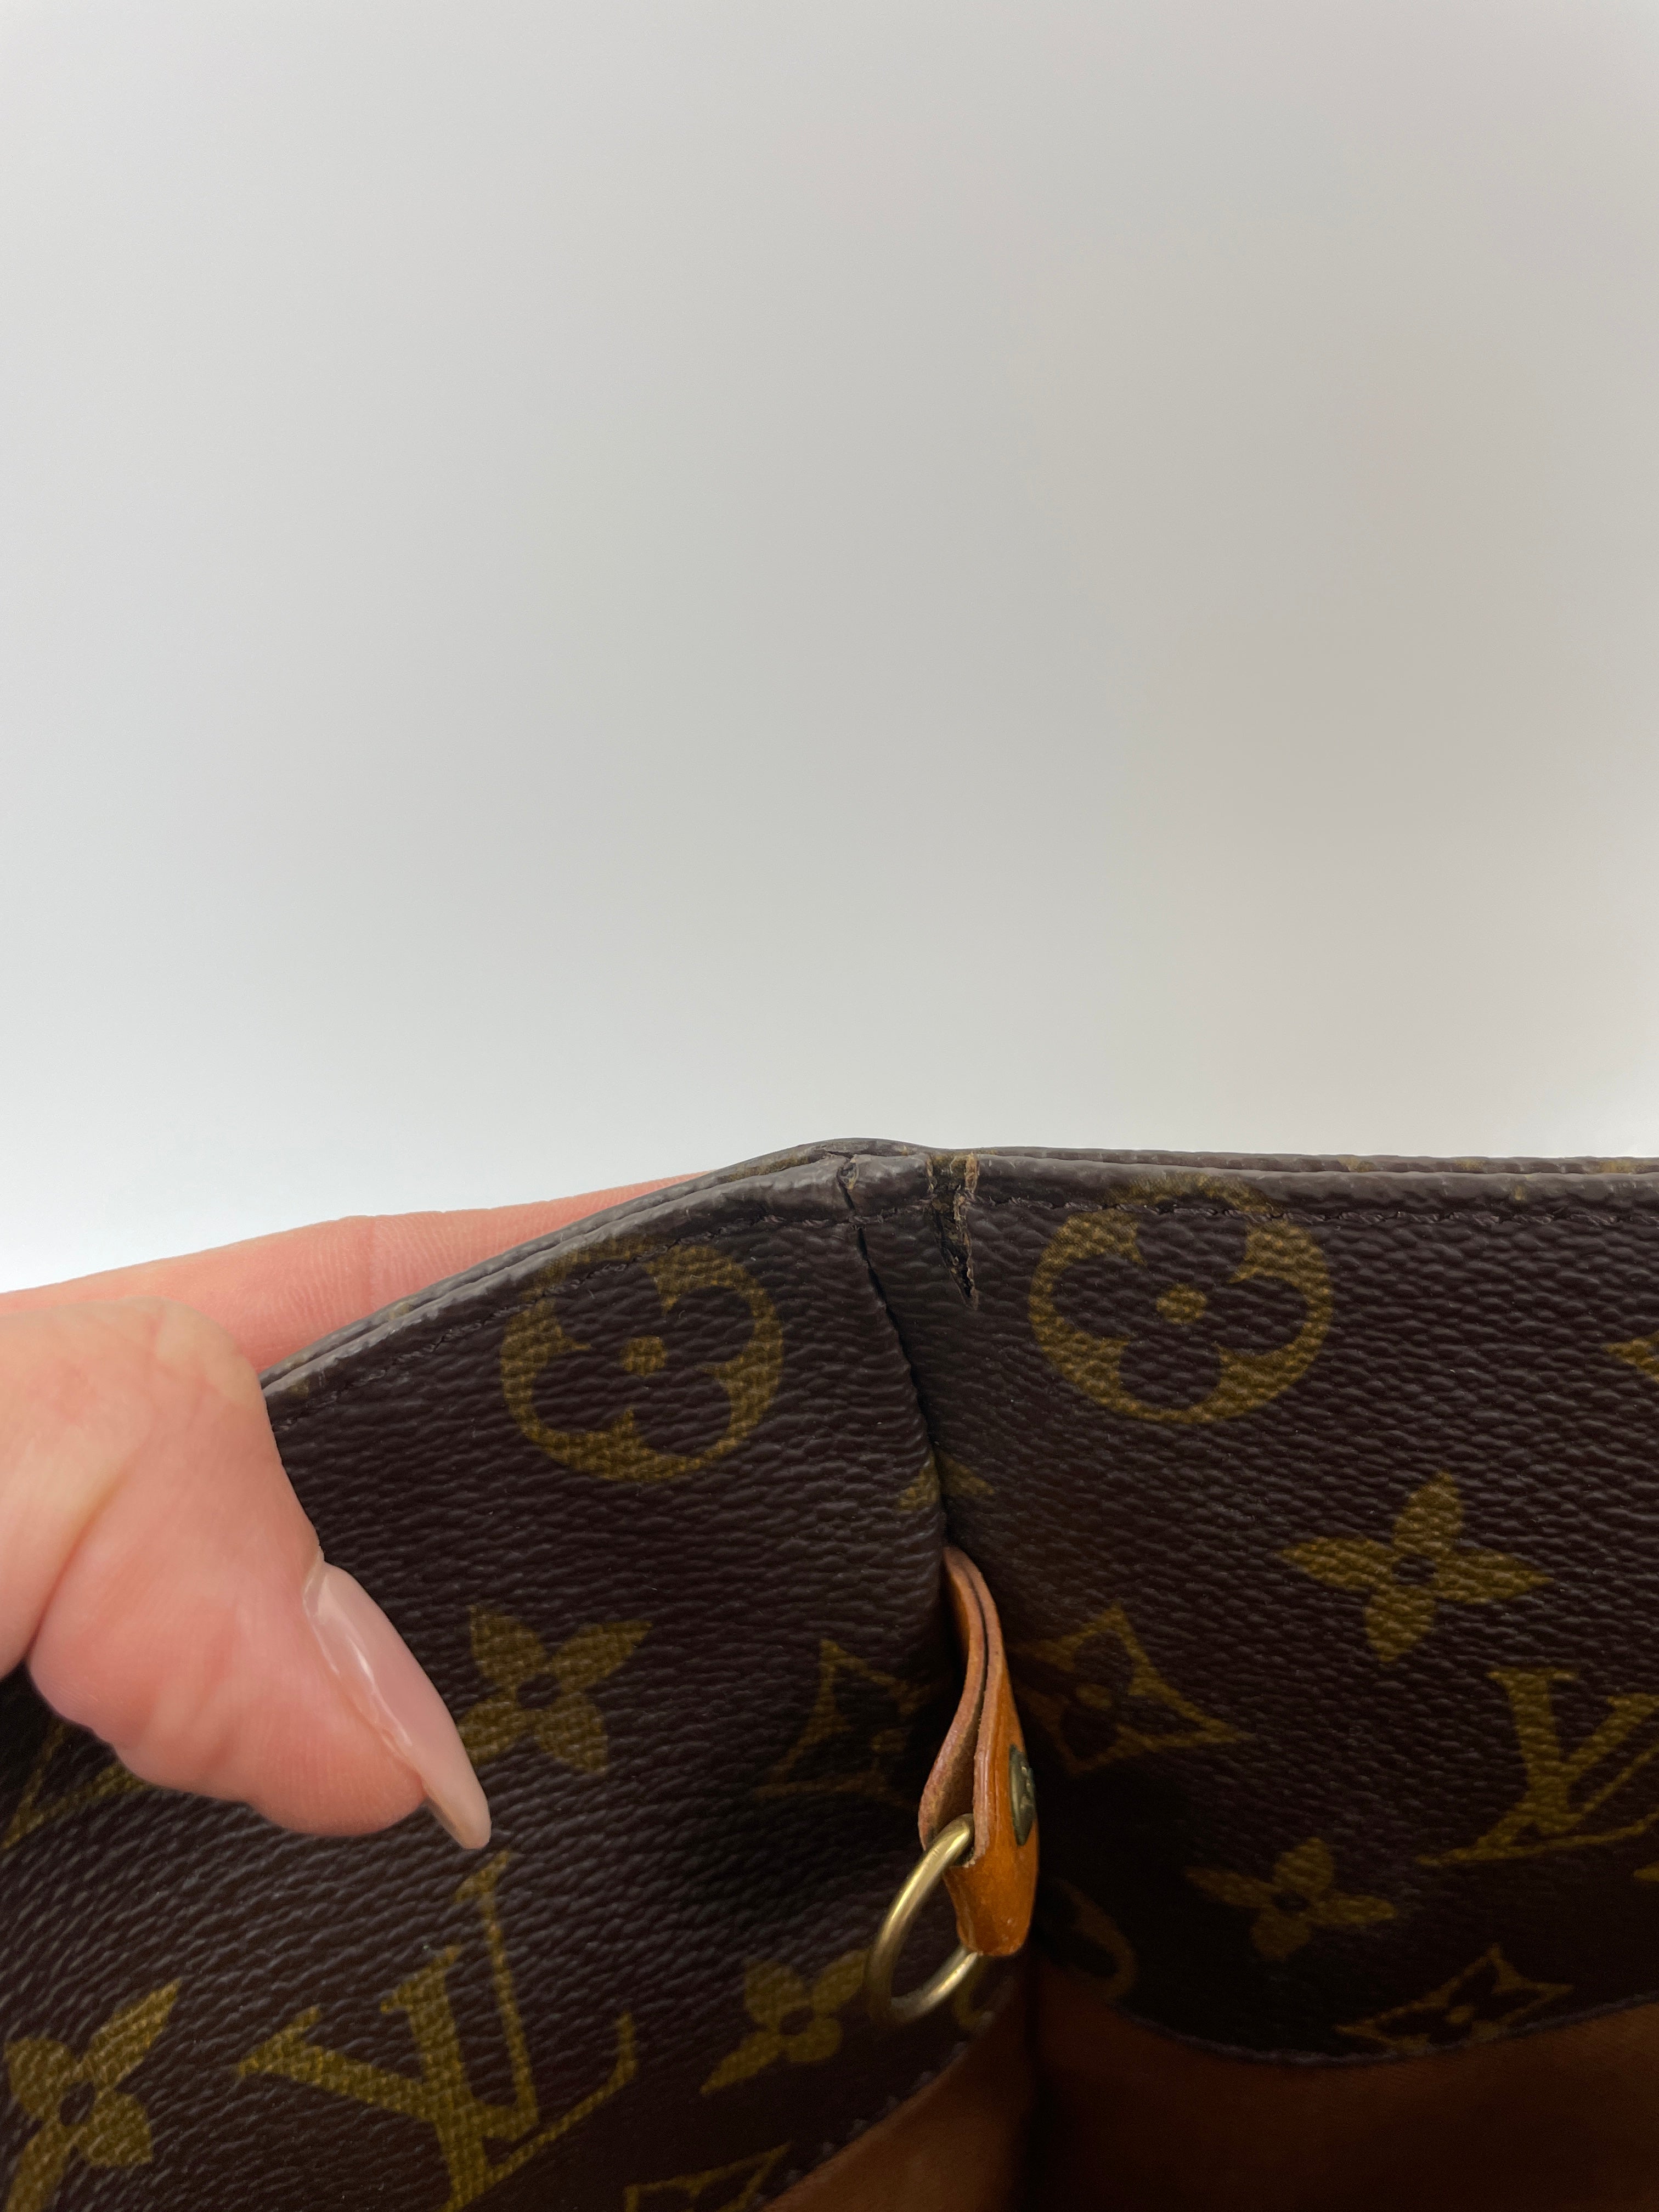 Louis Vuitton Sac Shopping Shoulder Tote Bag Used (6872)